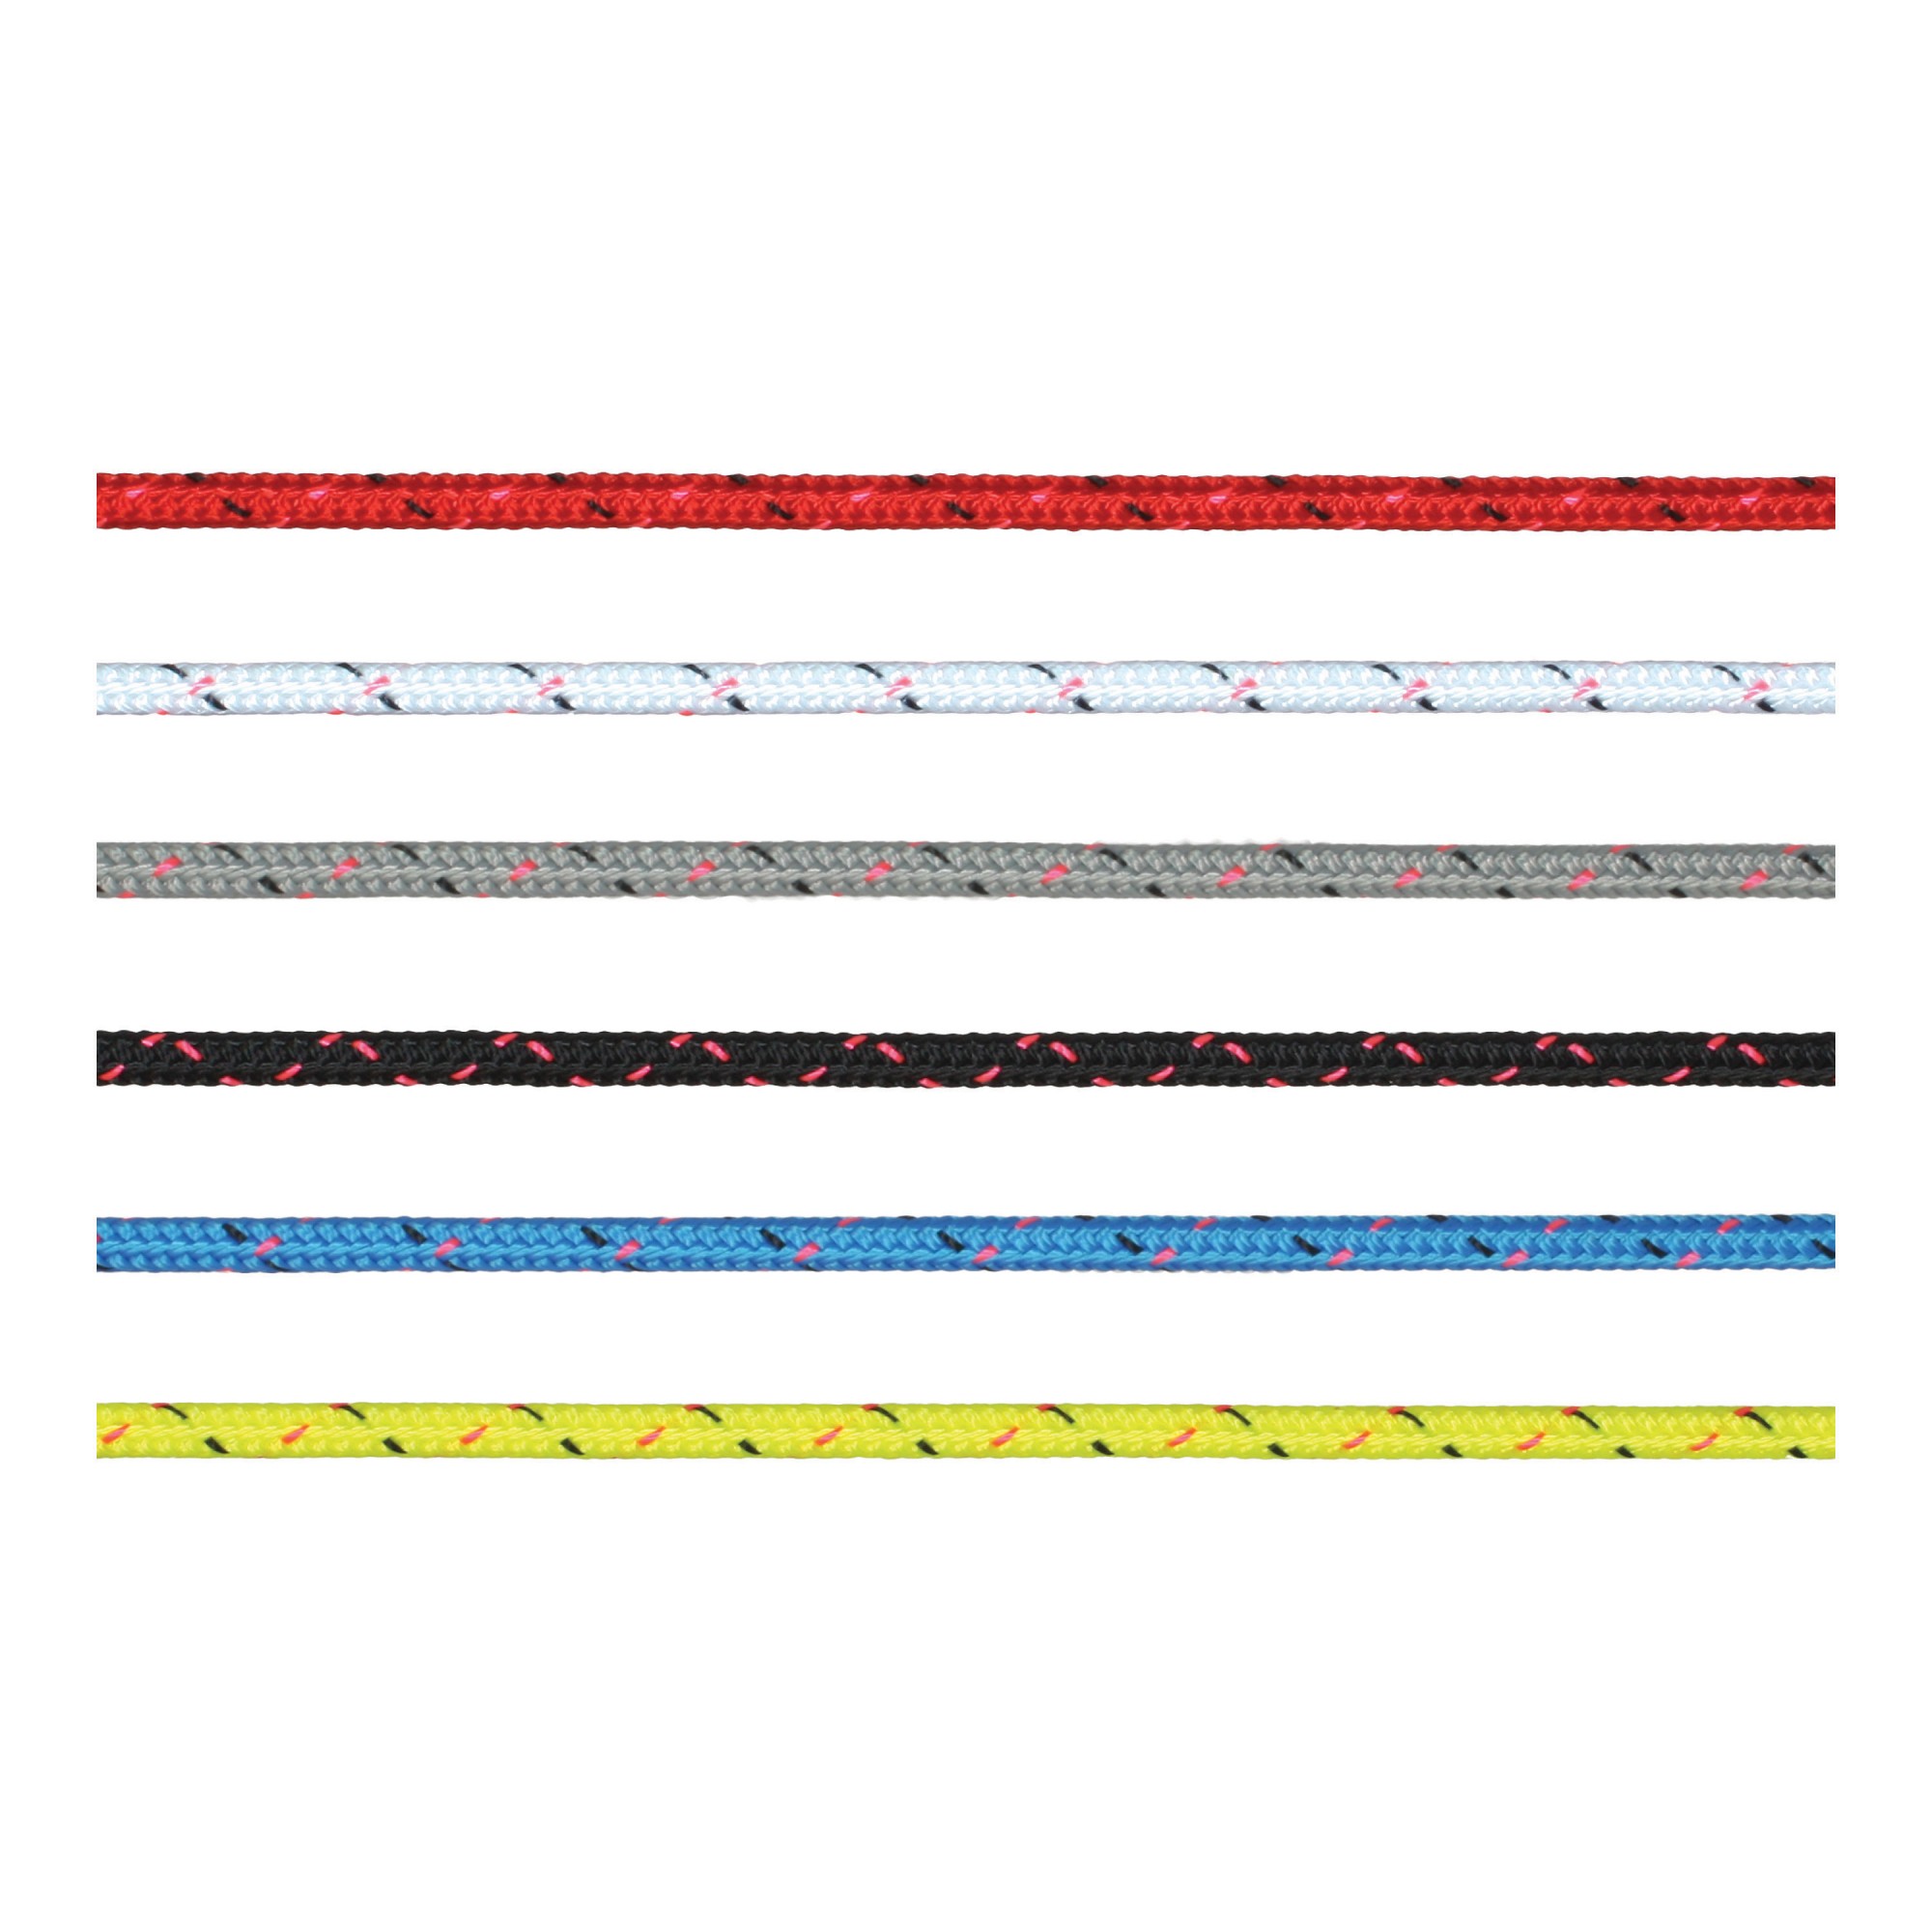 Трос Marlow Excel Pro из полиэстера цвета лайм 200 м диаметр 2 мм, Osculati 06.465.02LI